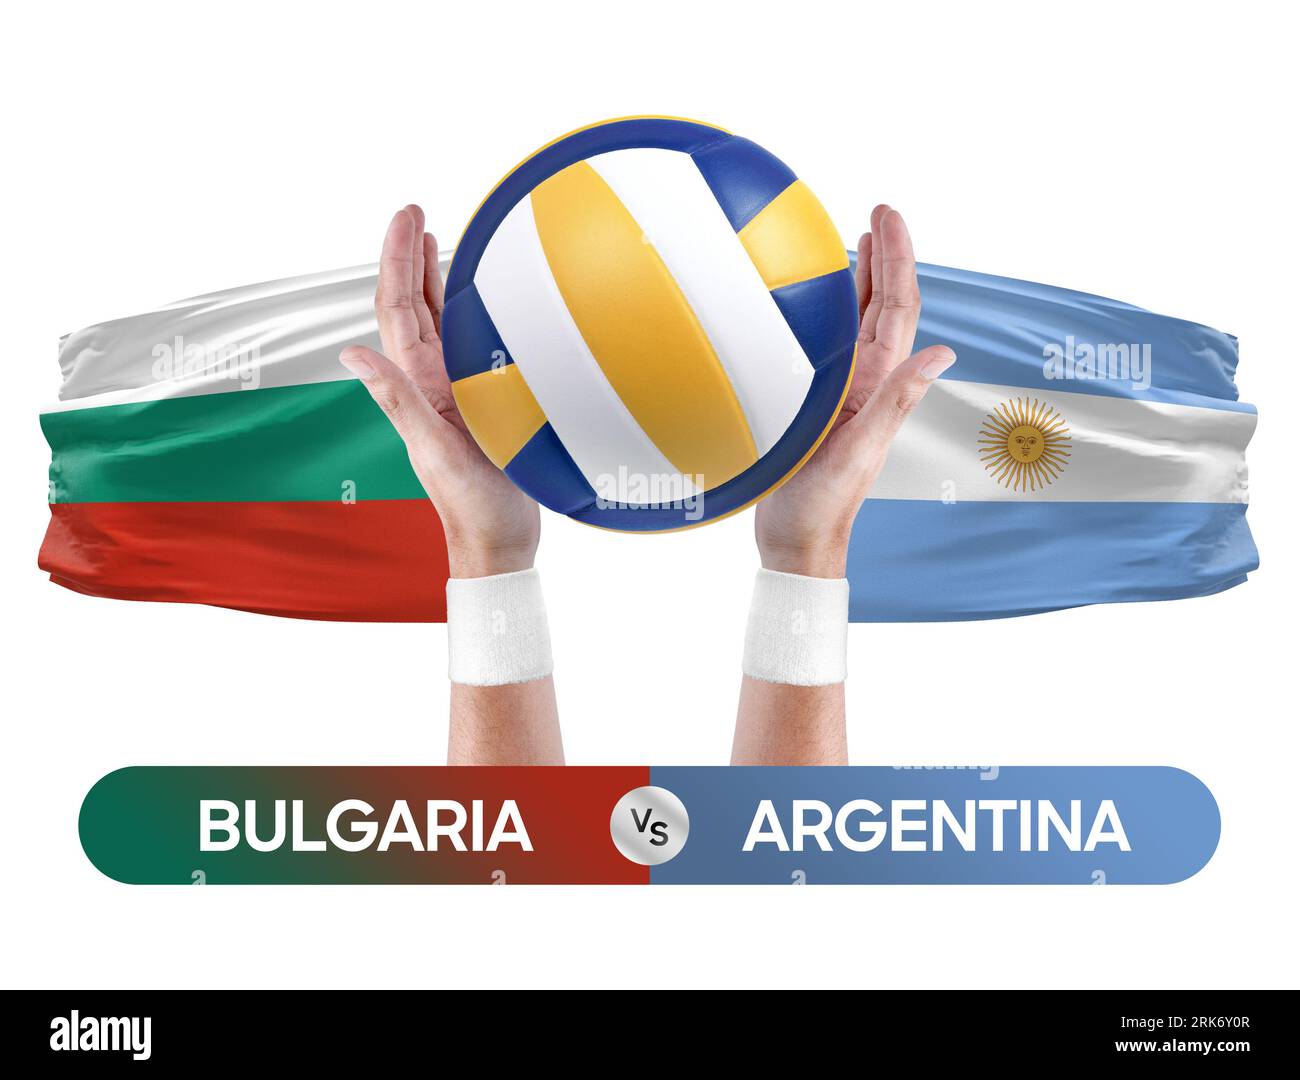 Bulgarien gegen Argentinien Nationalmannschaften Volleyball Volleyball-Volleyball-Spiel-Wettkampf-Konzept. Stockfoto